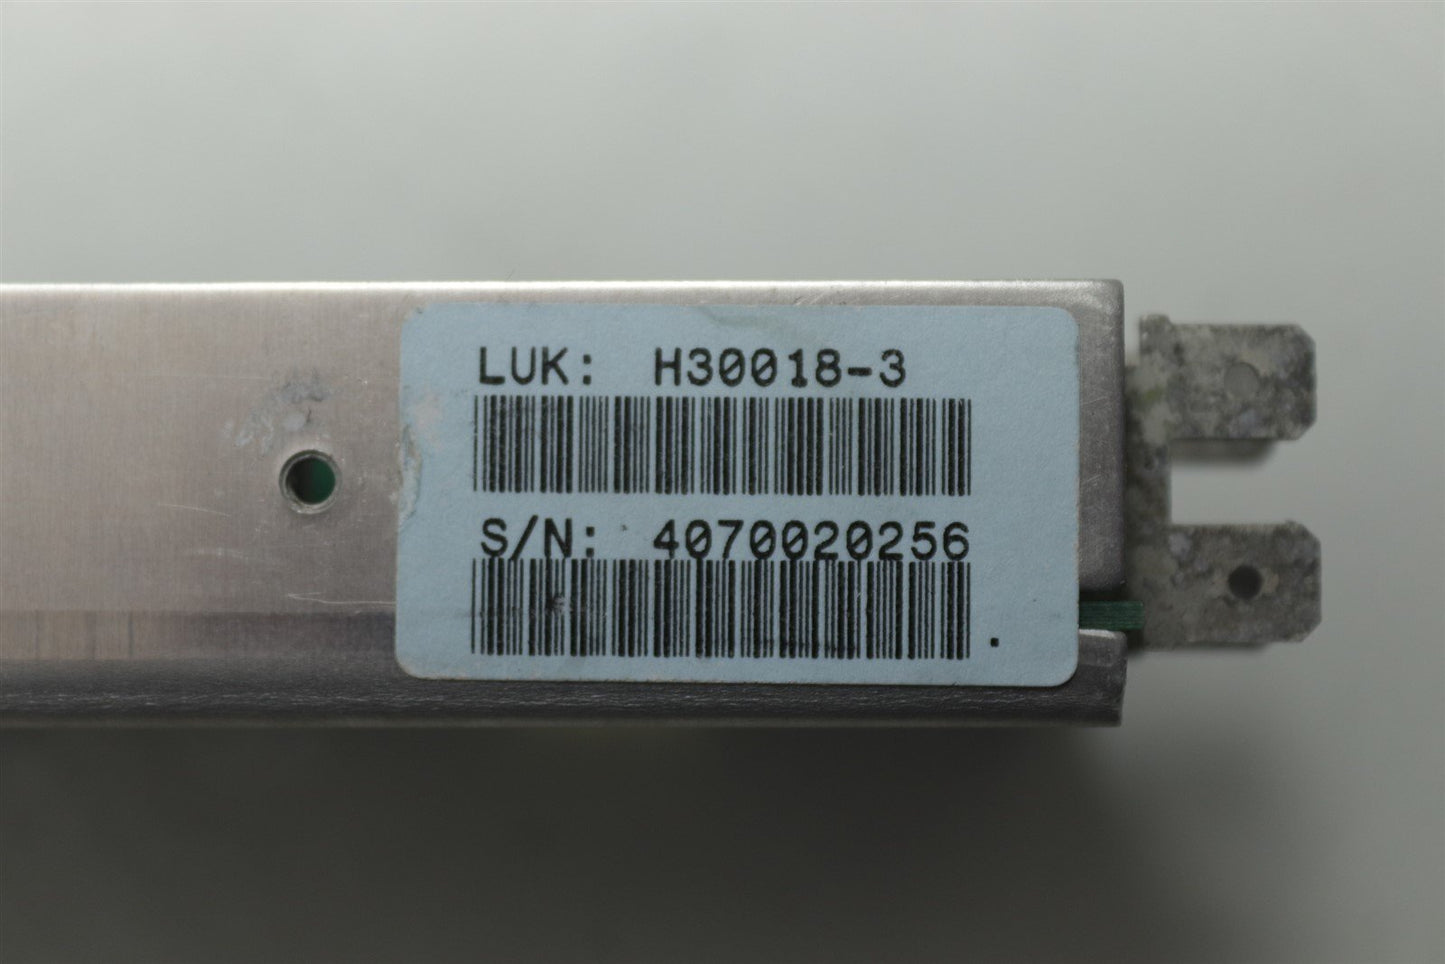 Lambda H30018-3 Alpha 1000W Inductive Power Supply Module 5VDC 8A